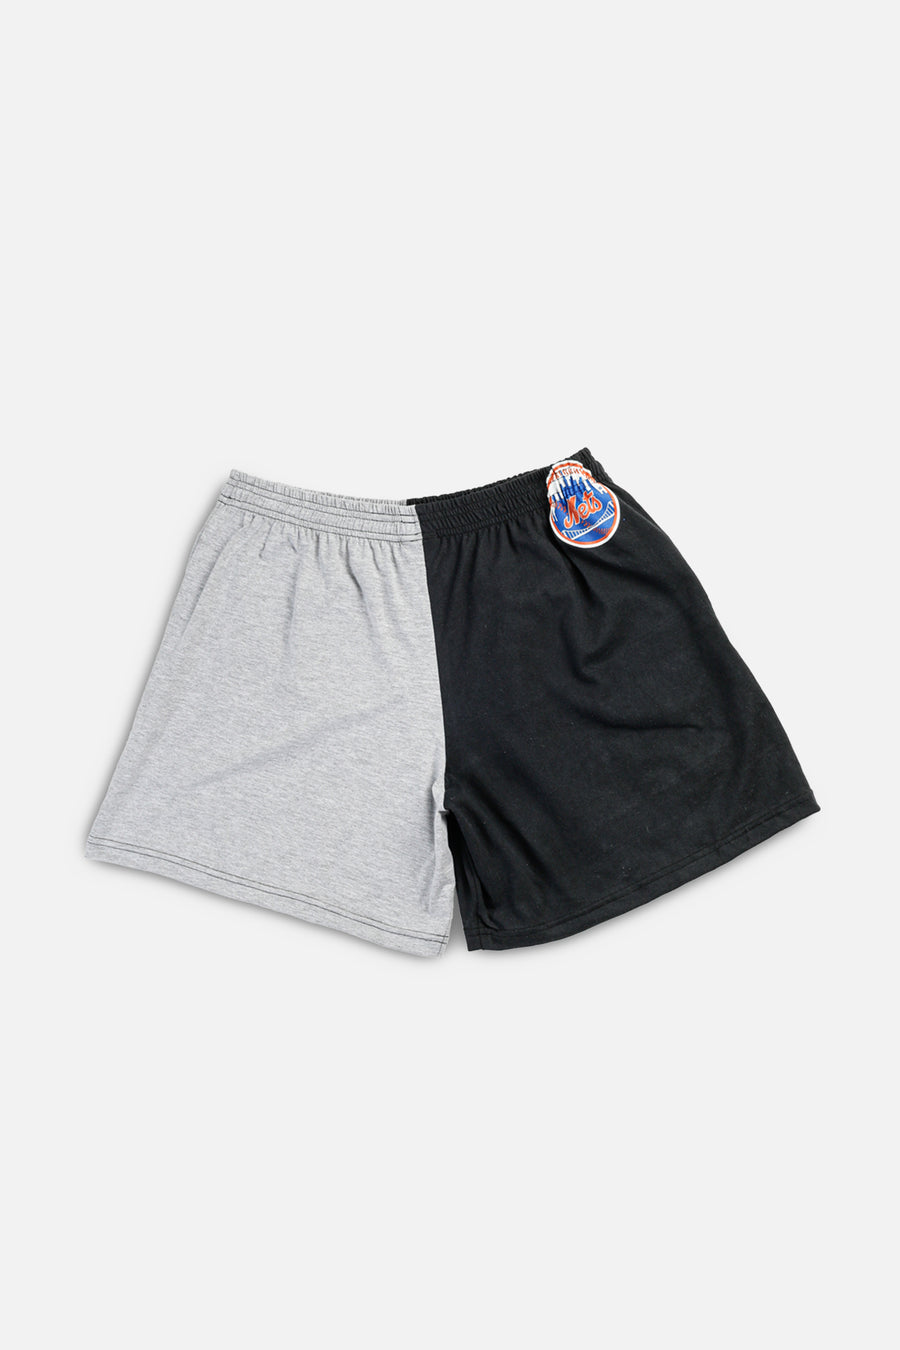 Unisex Rework New York Mets MLB Tee Shorts - XL